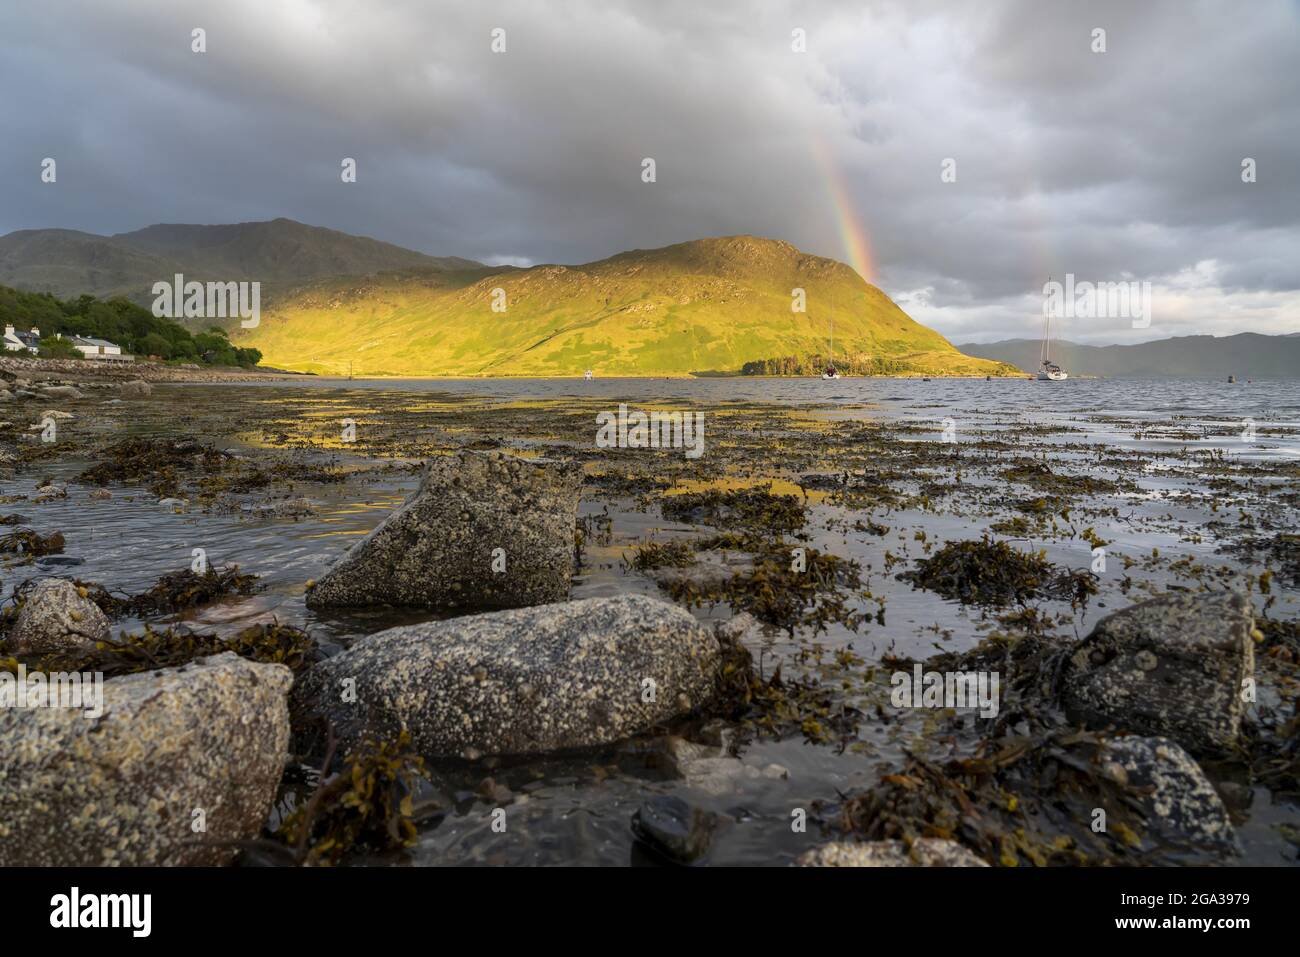 A rainbow spans the sky over Loch Nevis near the rocky shoreline of Inverie, Scotland; Inverie, Scotland Stock Photo